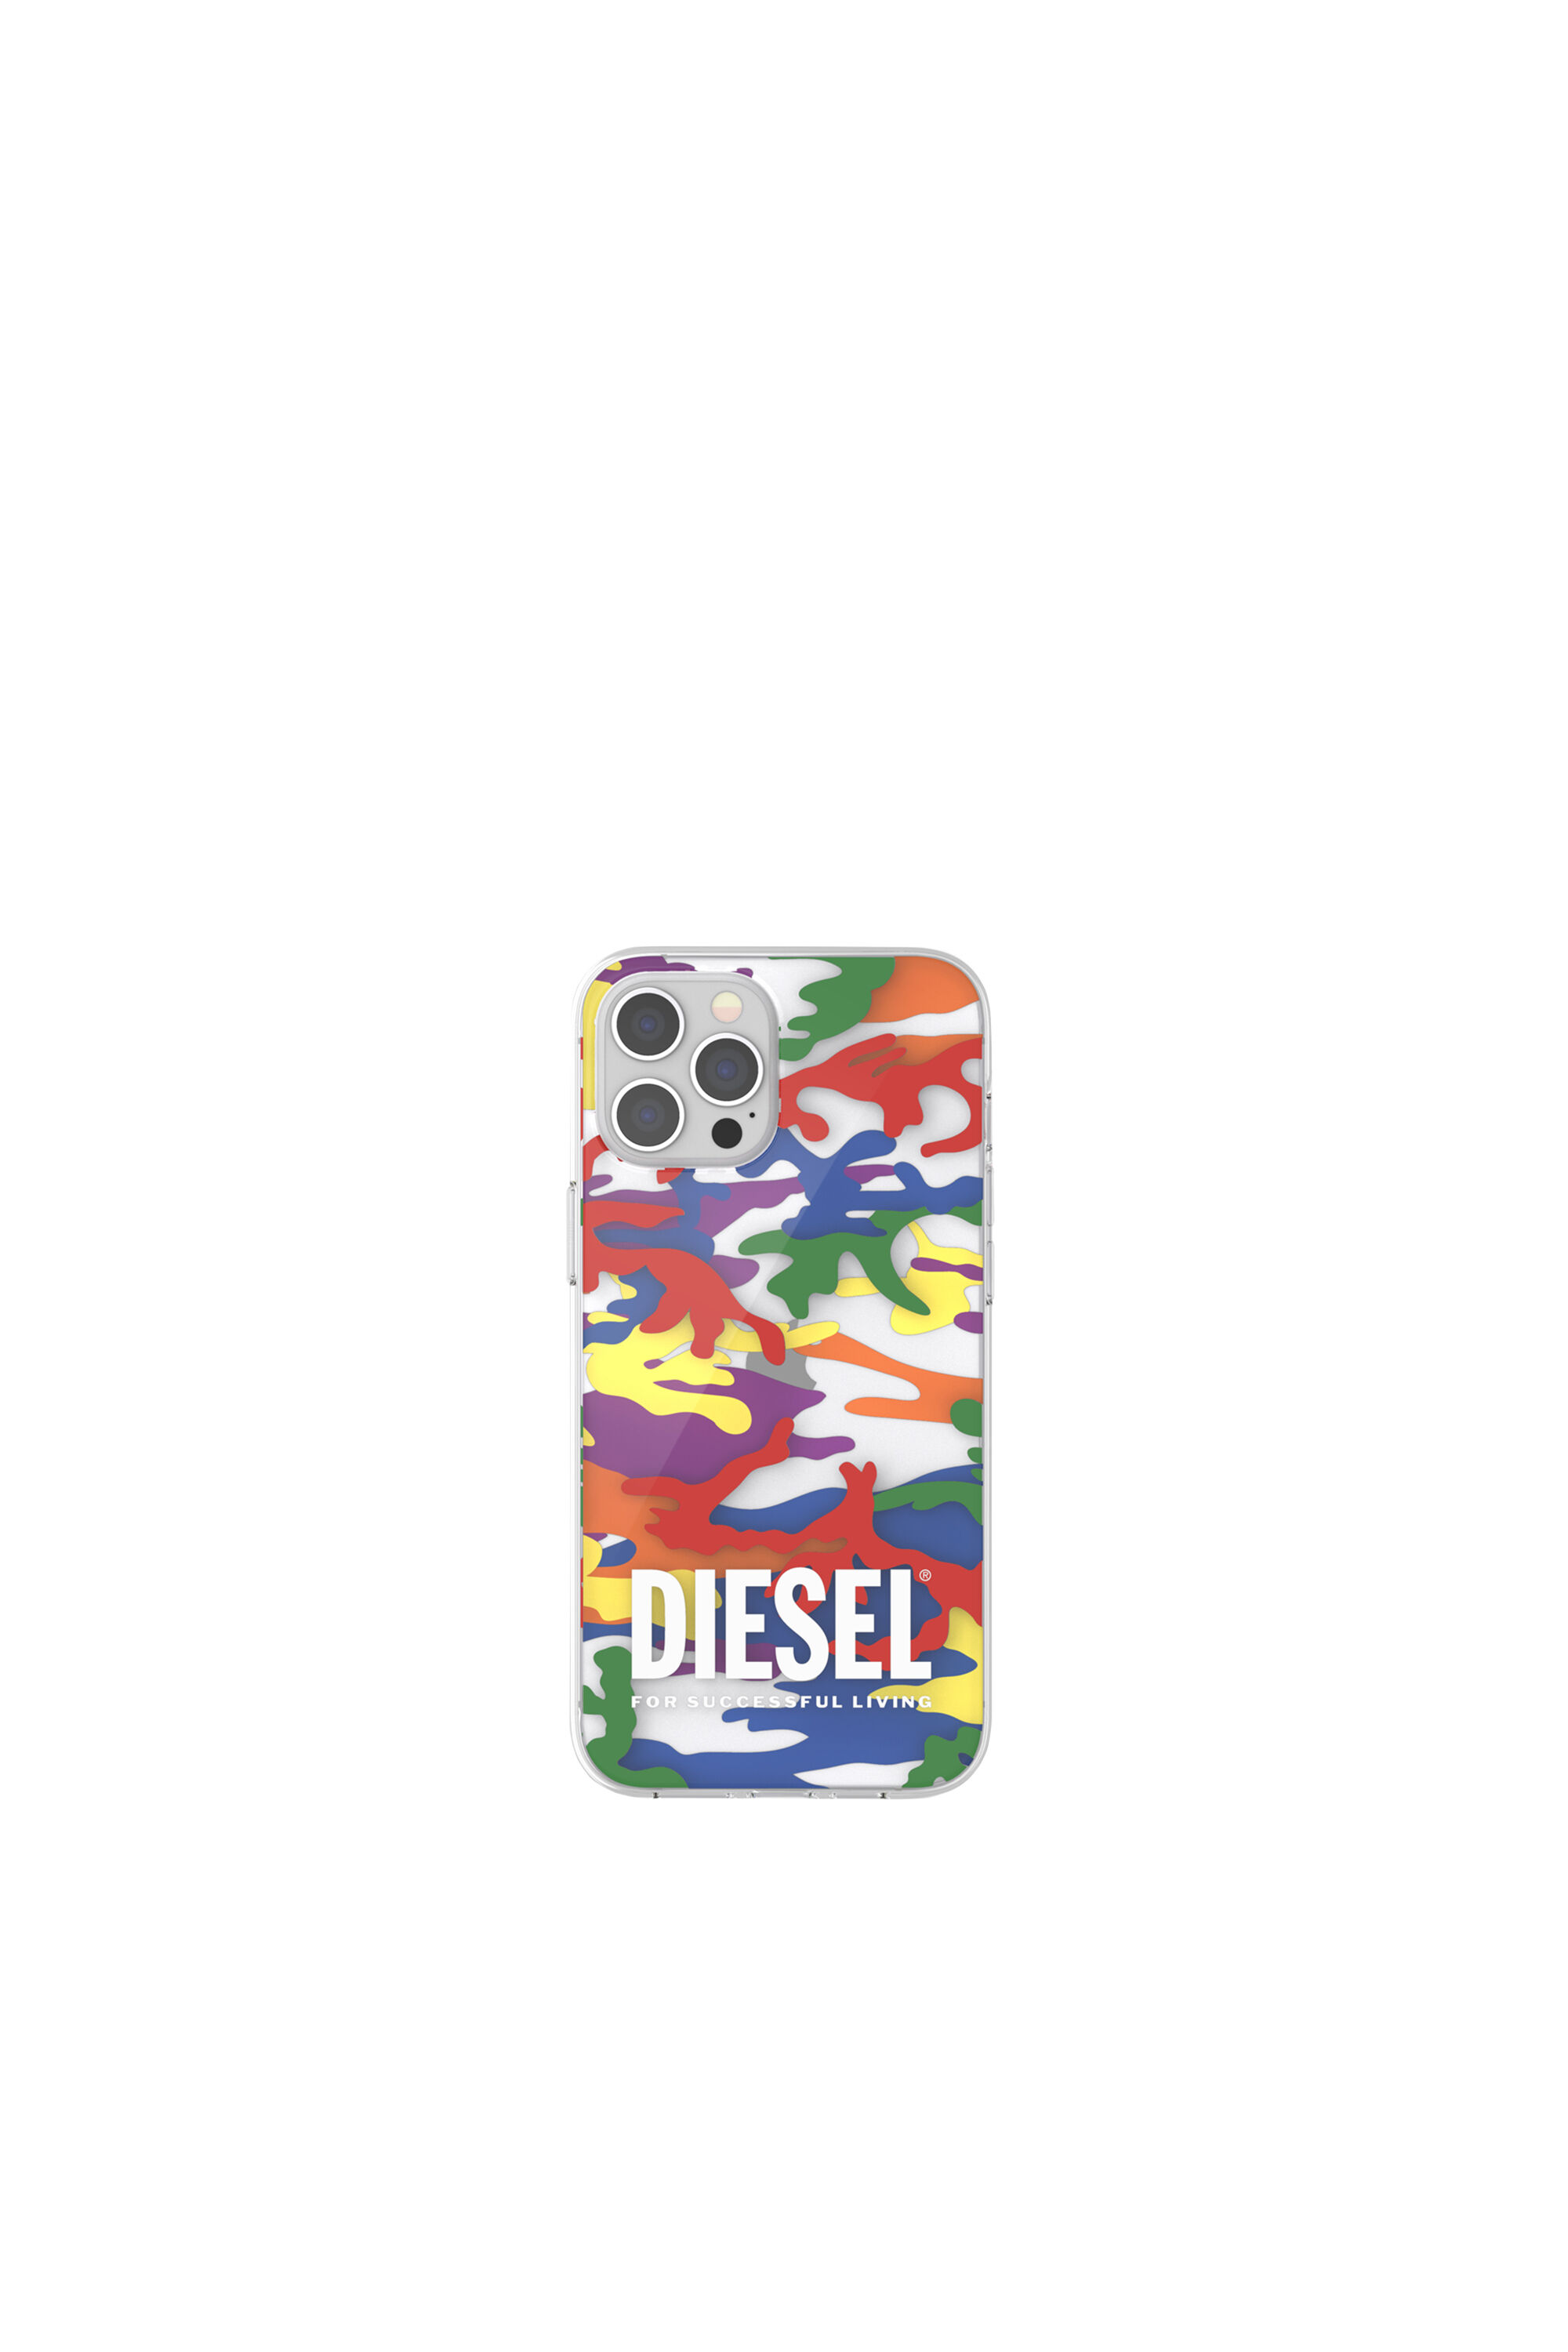 Diesel - 44333  STANDARD CASES, Multicolore - Image 2